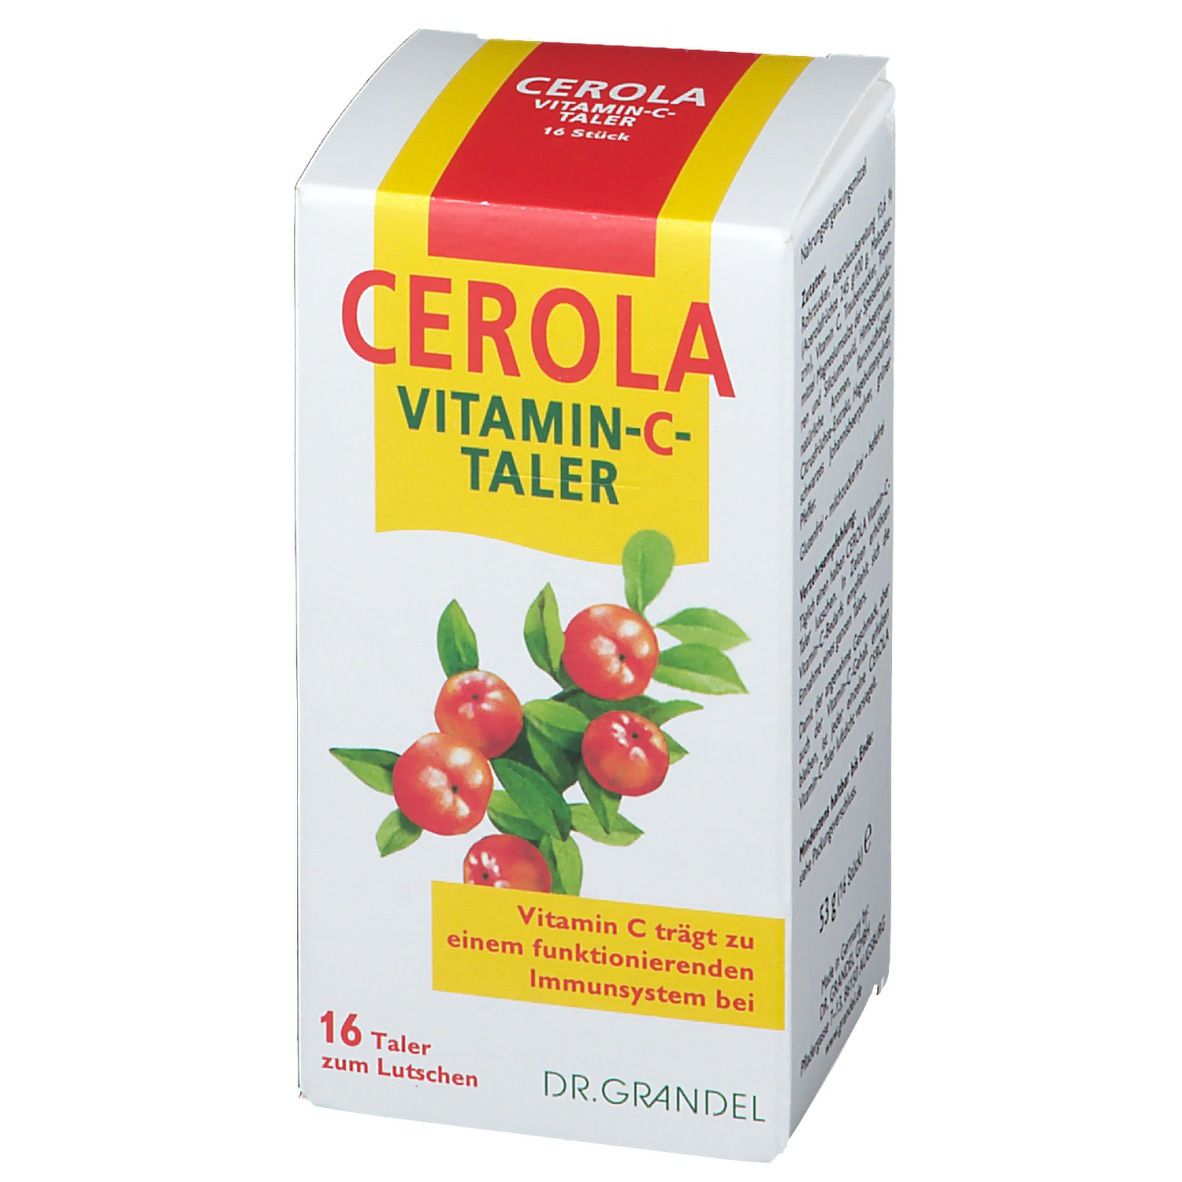 CEROLA Vitamin-C-Taler